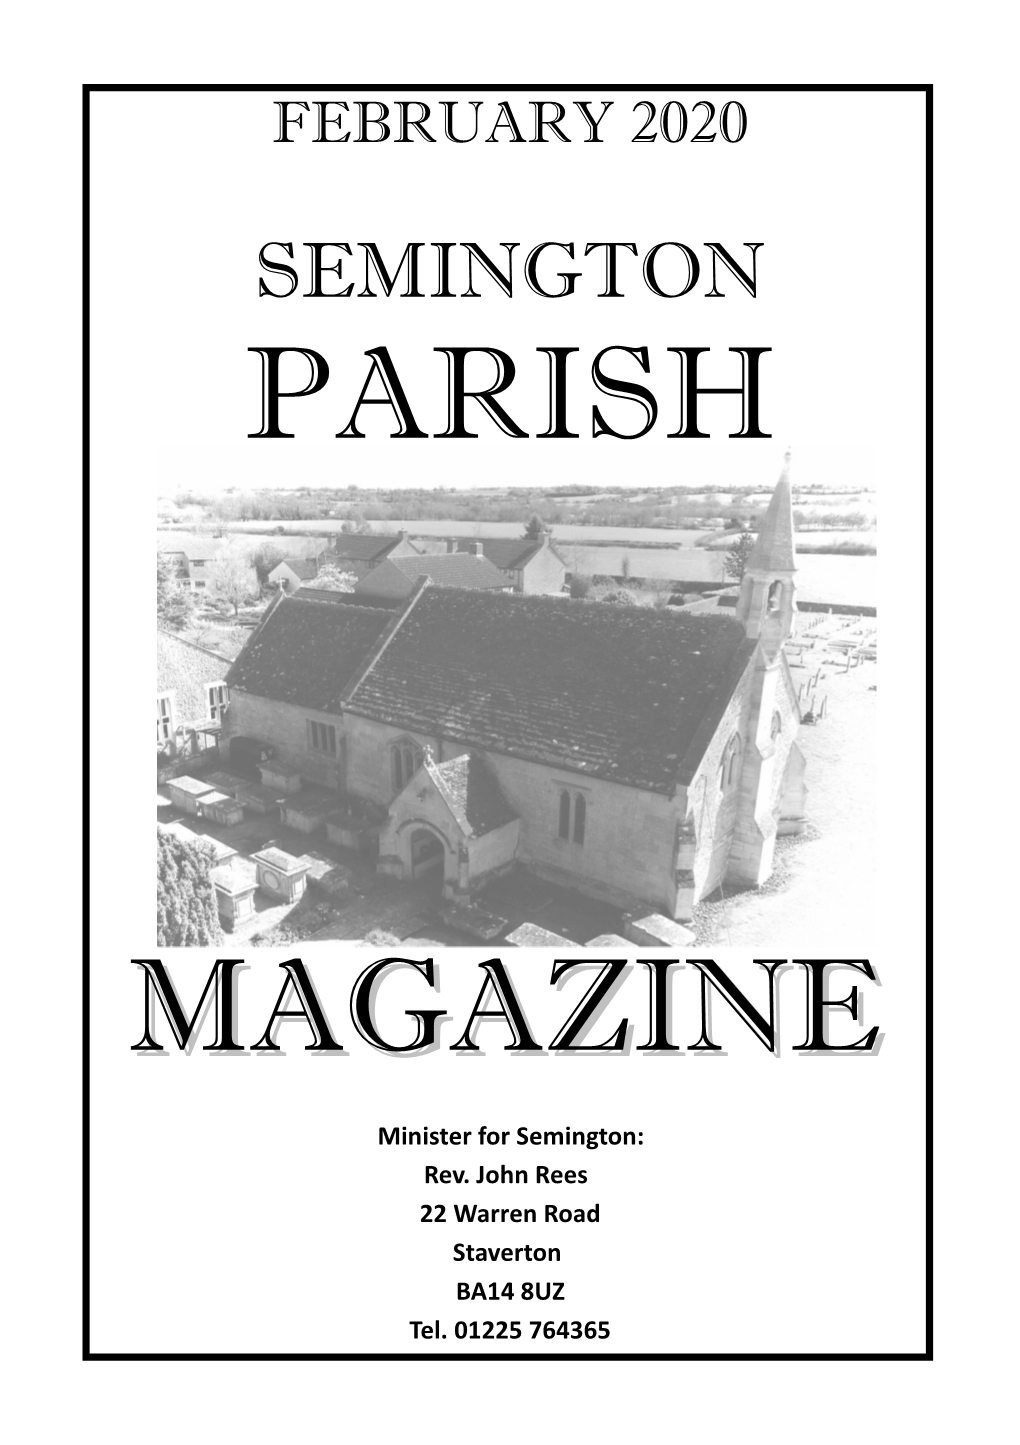 February 2020 Semington Parish Magazine